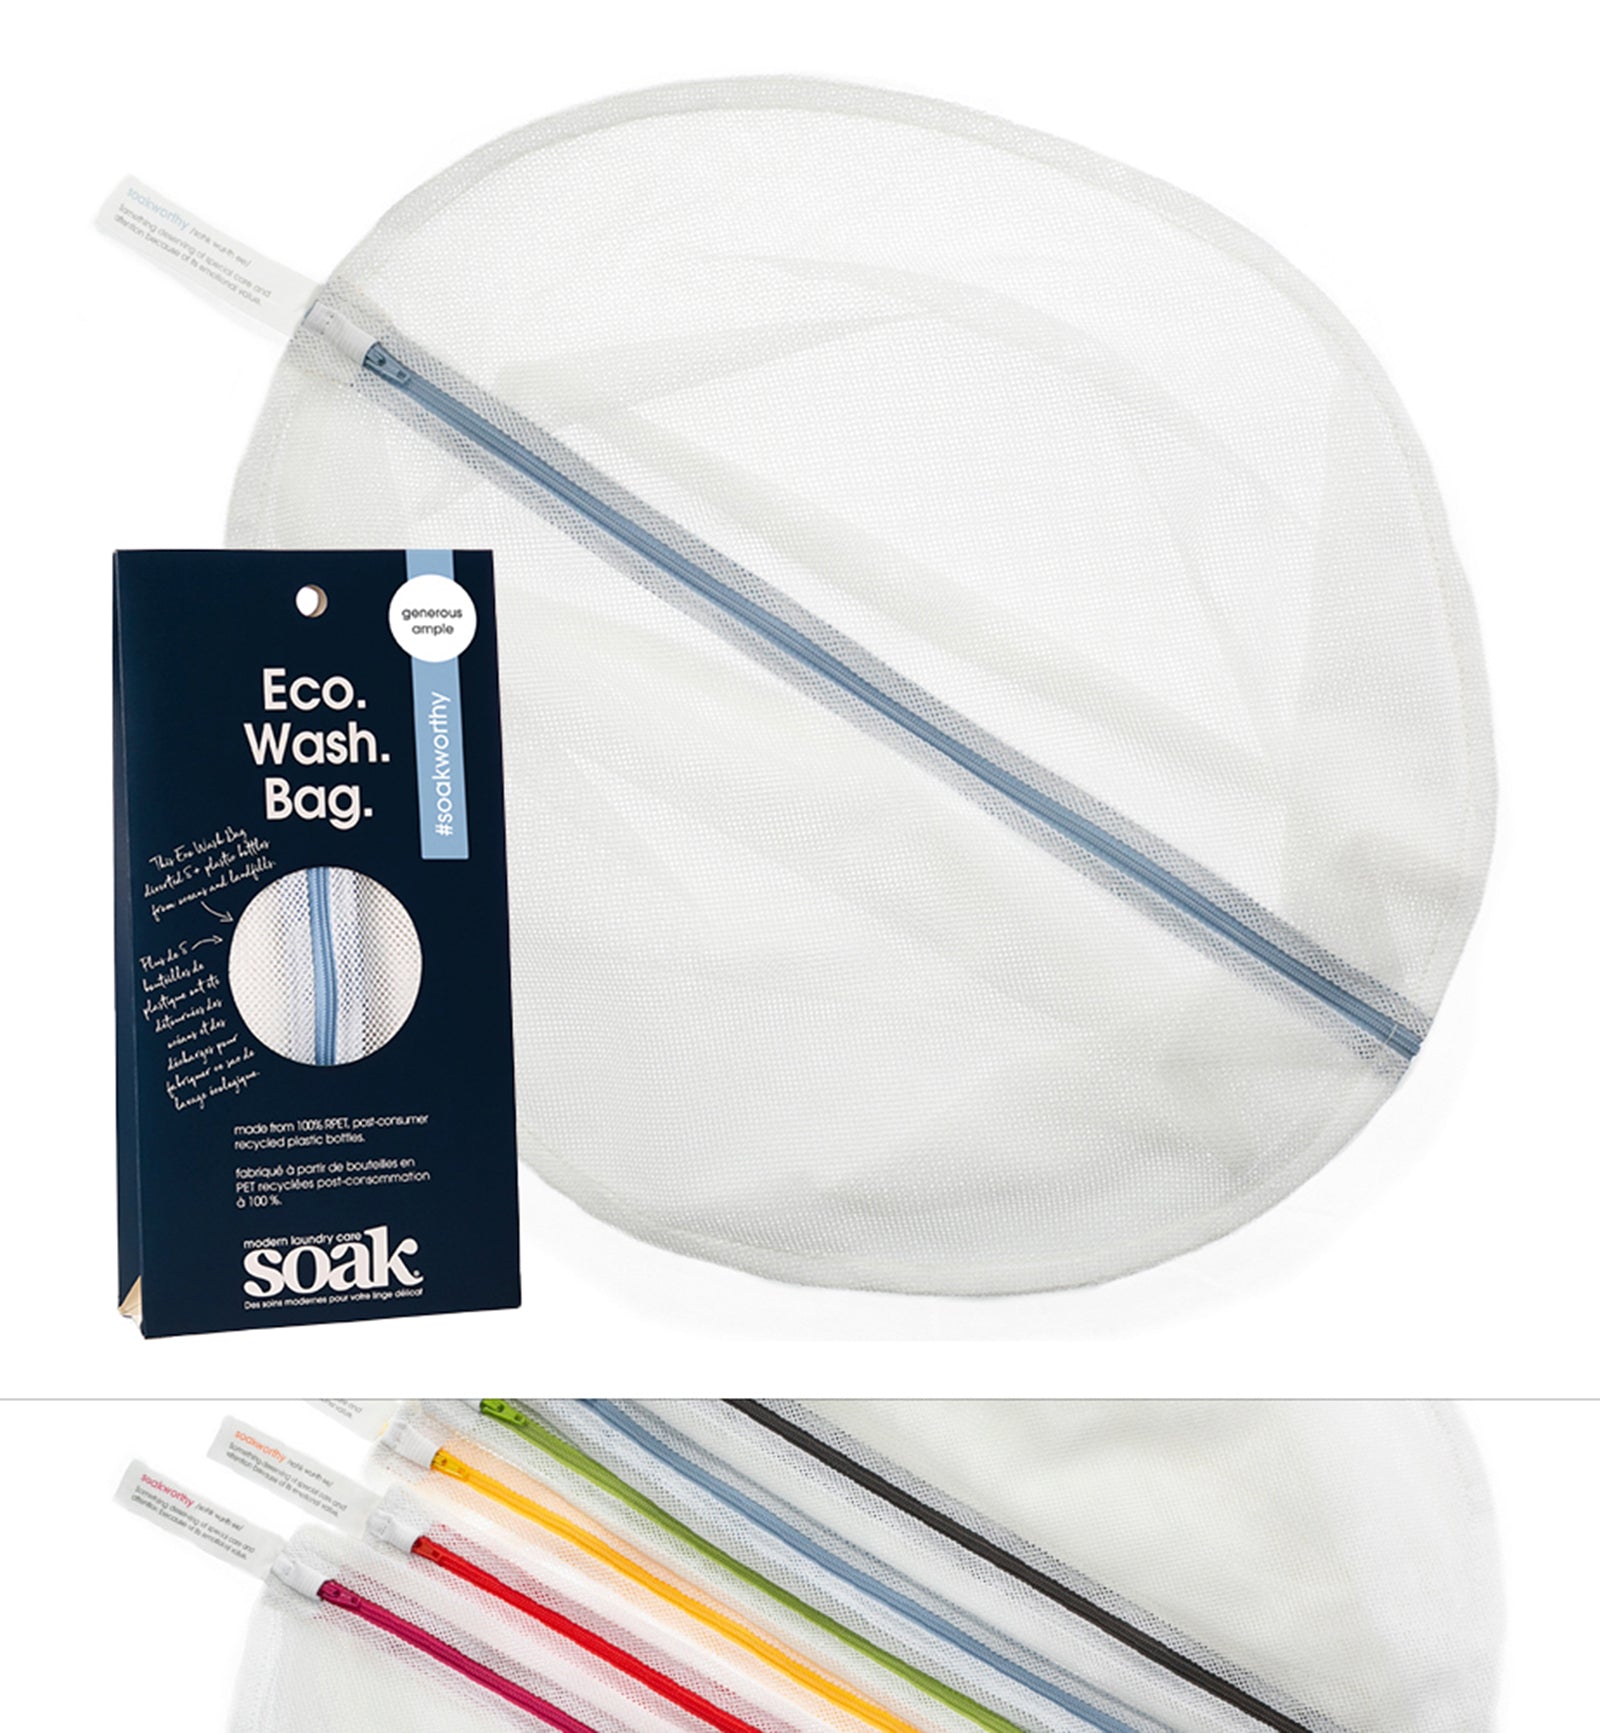 Soak Eco Wash Bag- Generous (16 inch hemisphere),Scentless - Scentless,16 inch hemisphere